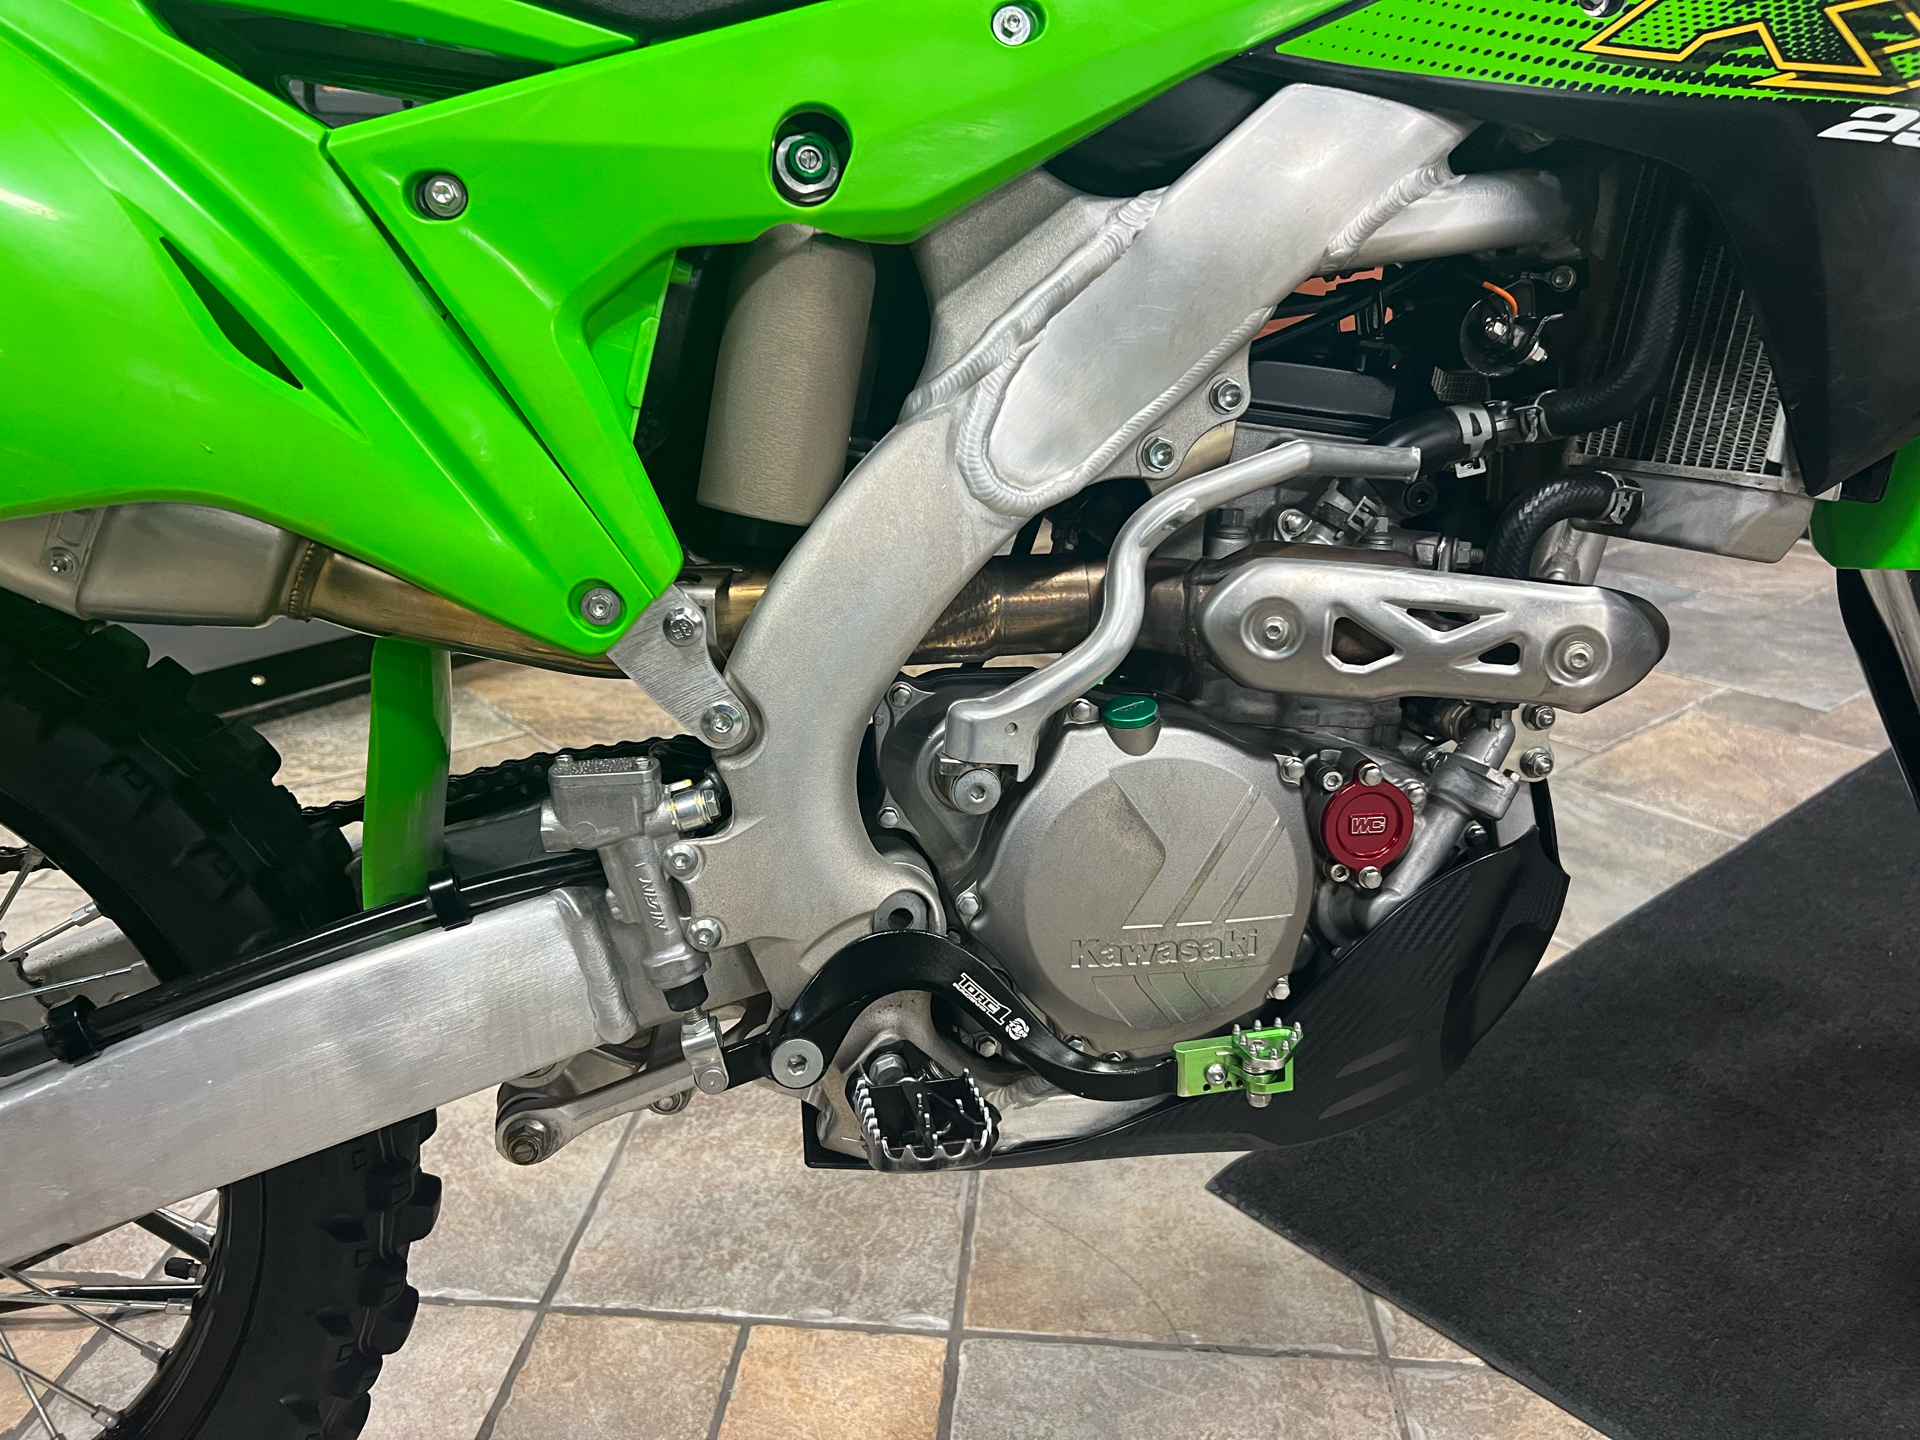 2020 Kawasaki KX 250 in Monroe, Michigan - Photo 3